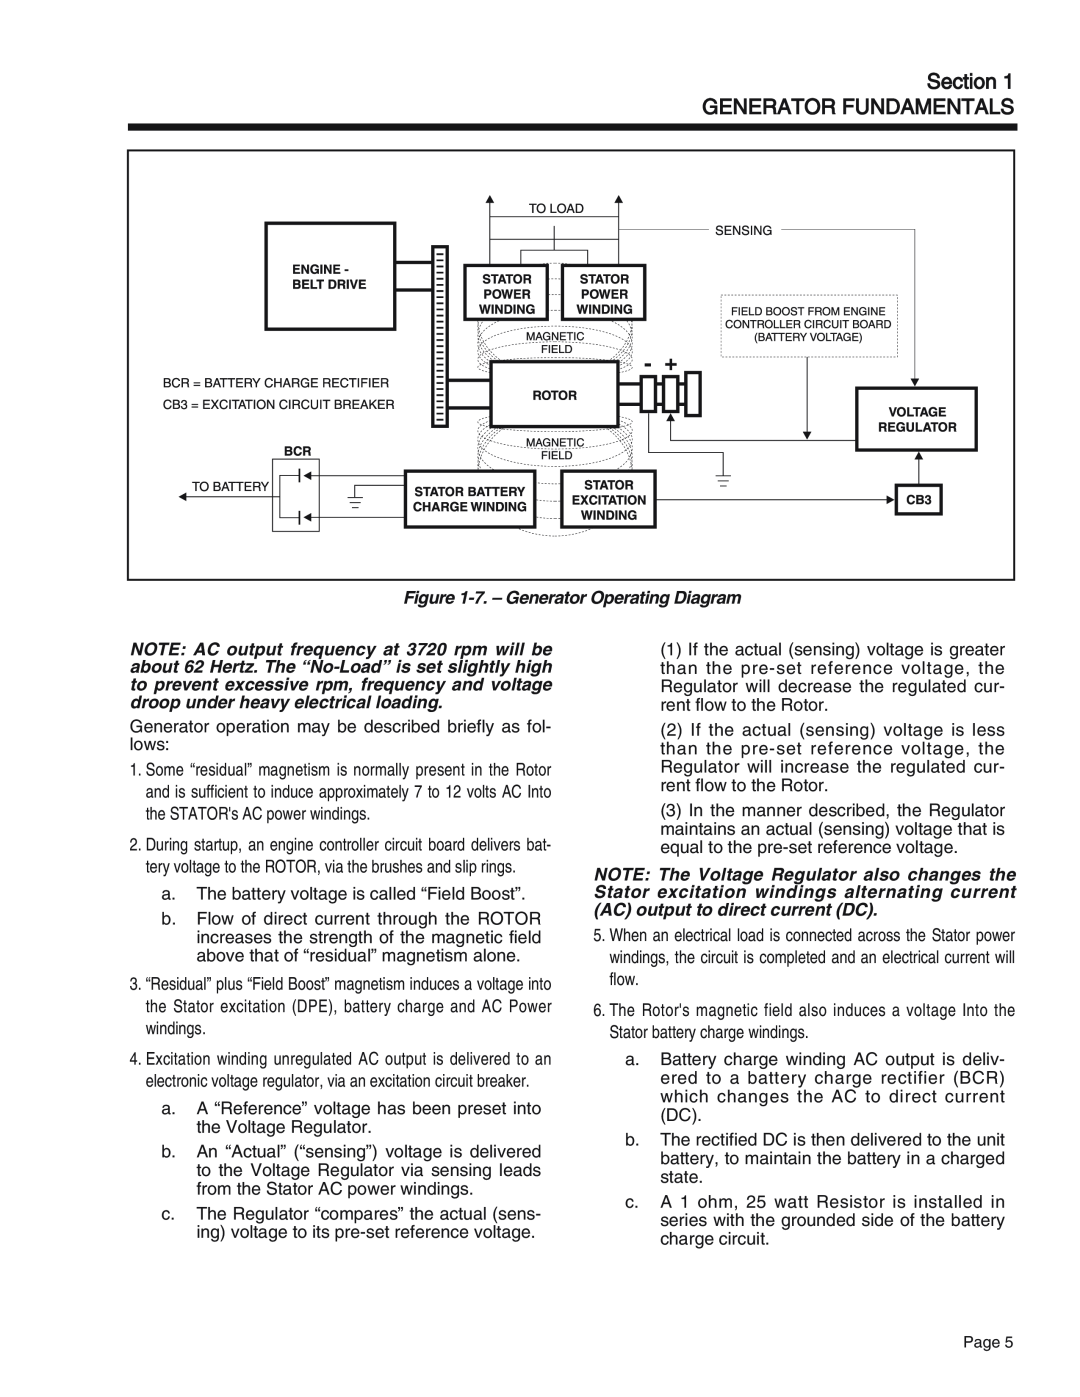 Generac Power Systems 75, 55, 65 manual 7.- Generator Operating Diagram, Section GENERATOR FUNDAMENTALS 